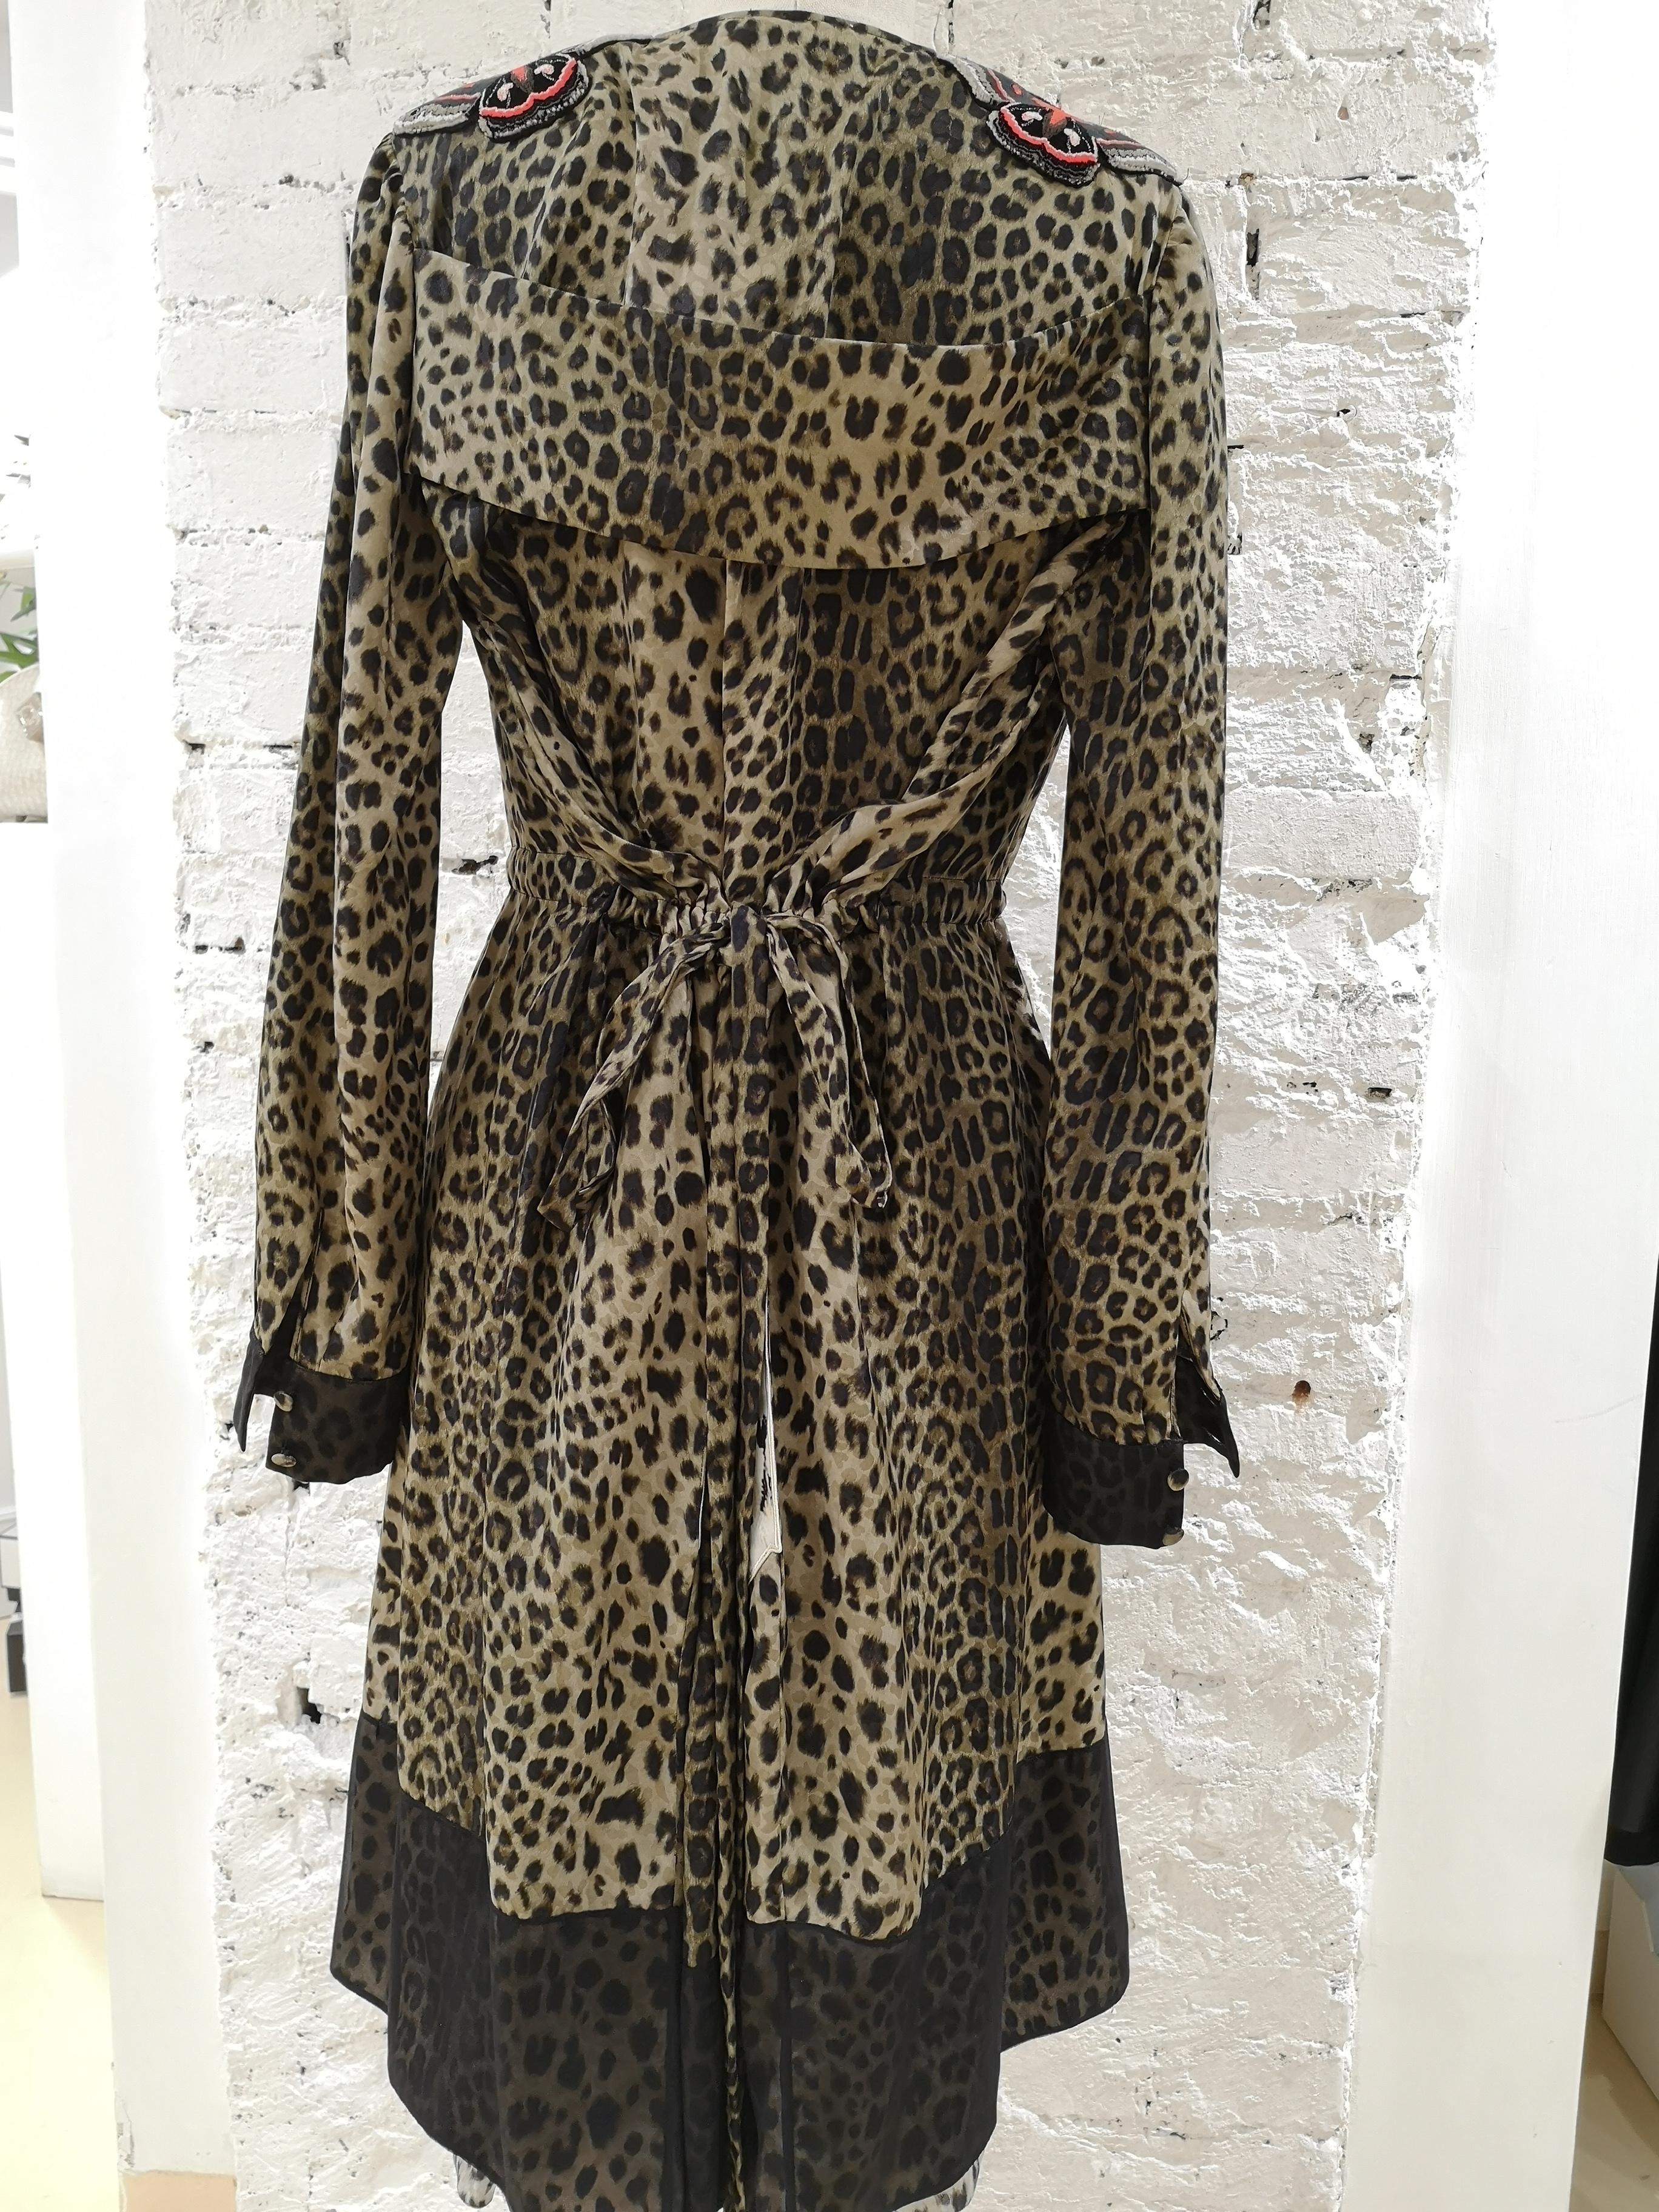 Givenchy Leopard Butterfly Dress 6